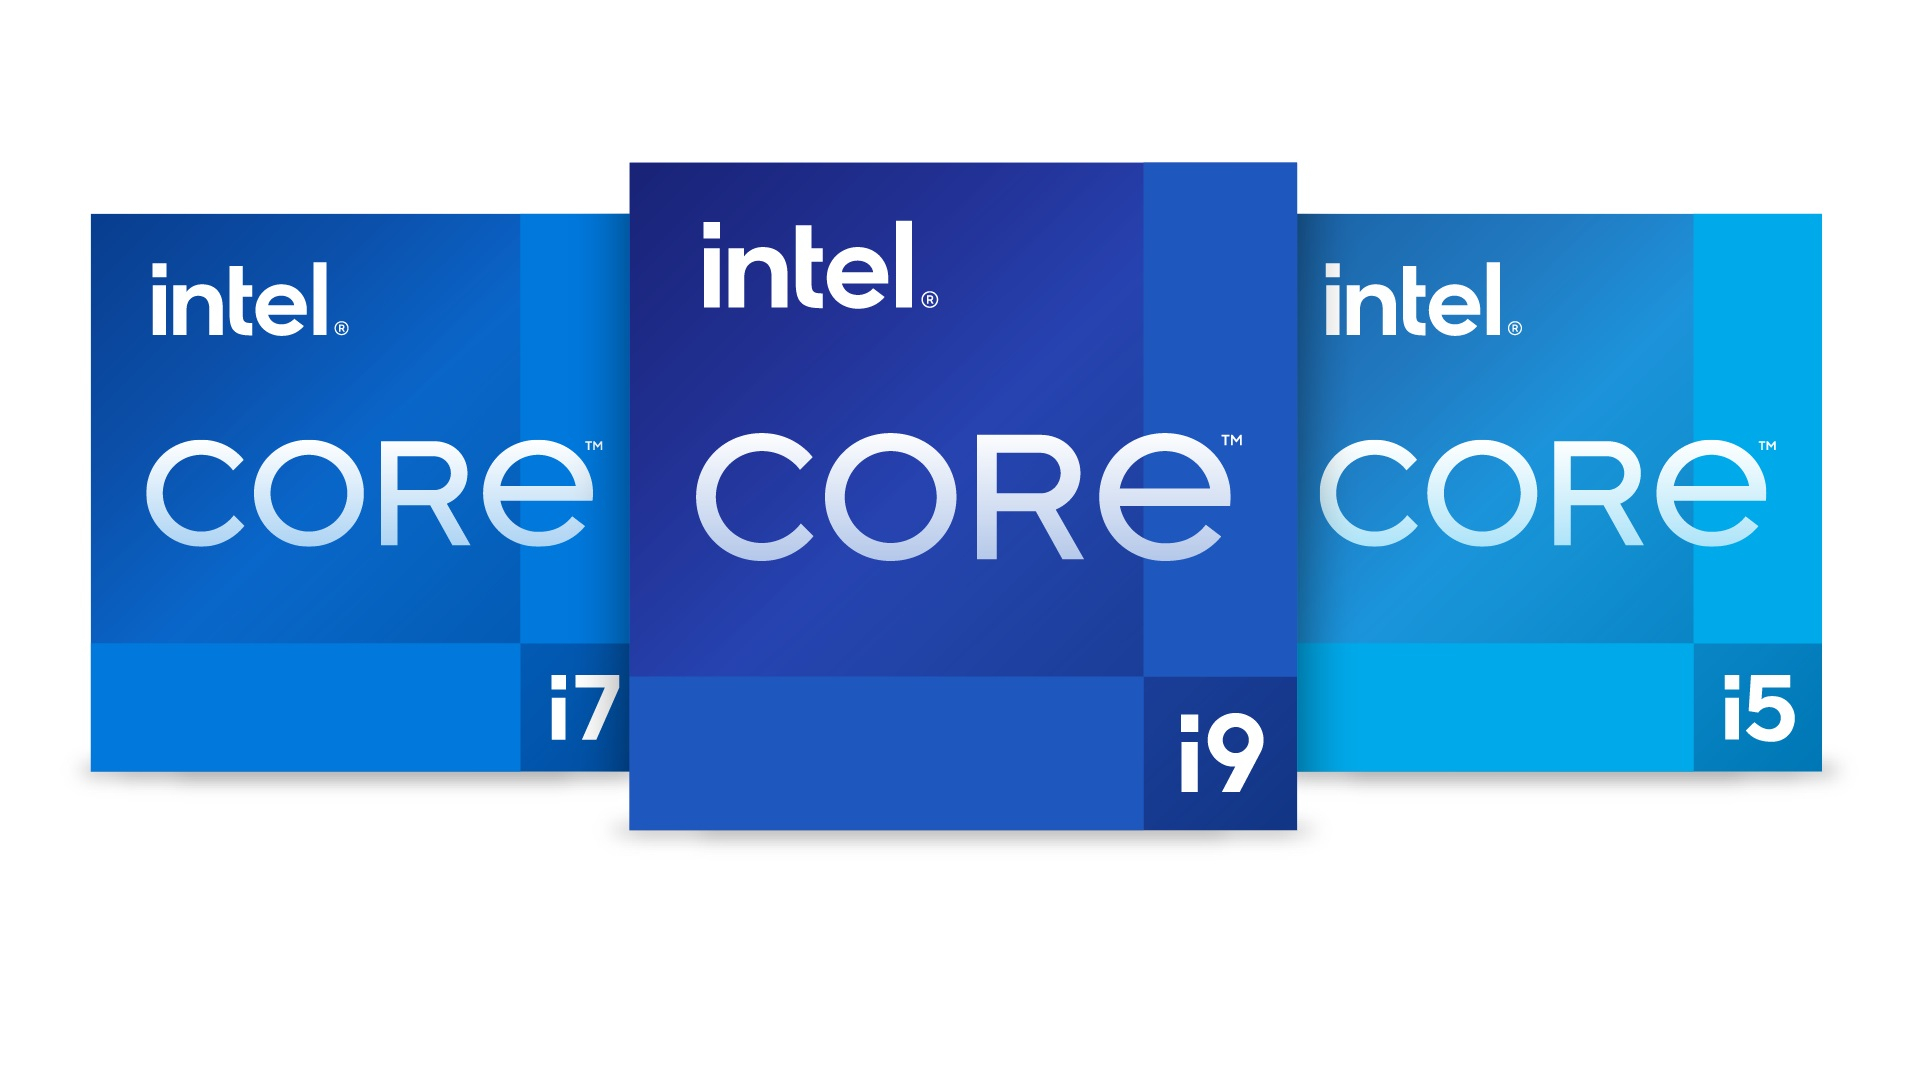 Intel® Core™ i9 Desktop Processors for Gaming